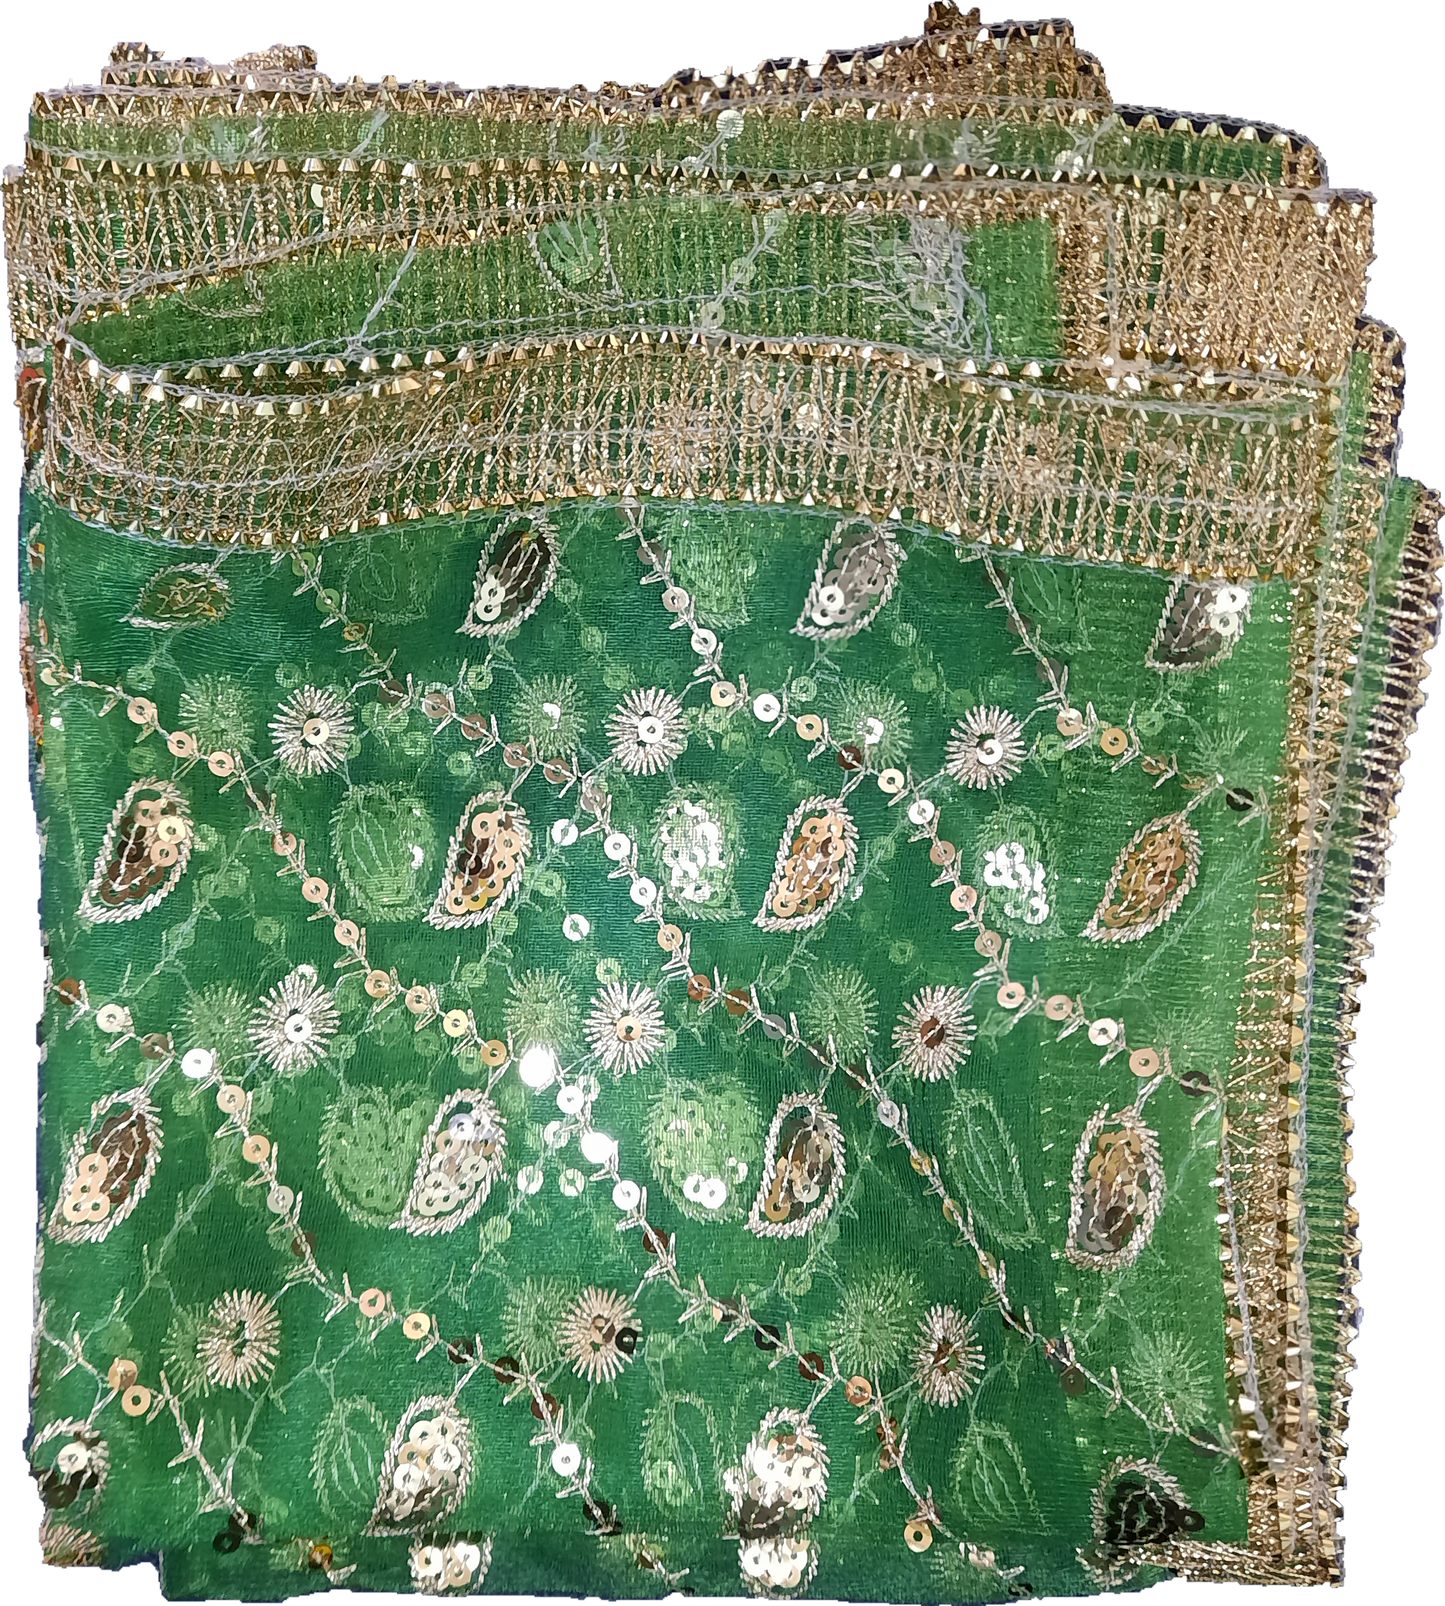 Chundadi (pooja)( Green Colour) (90*45cm)